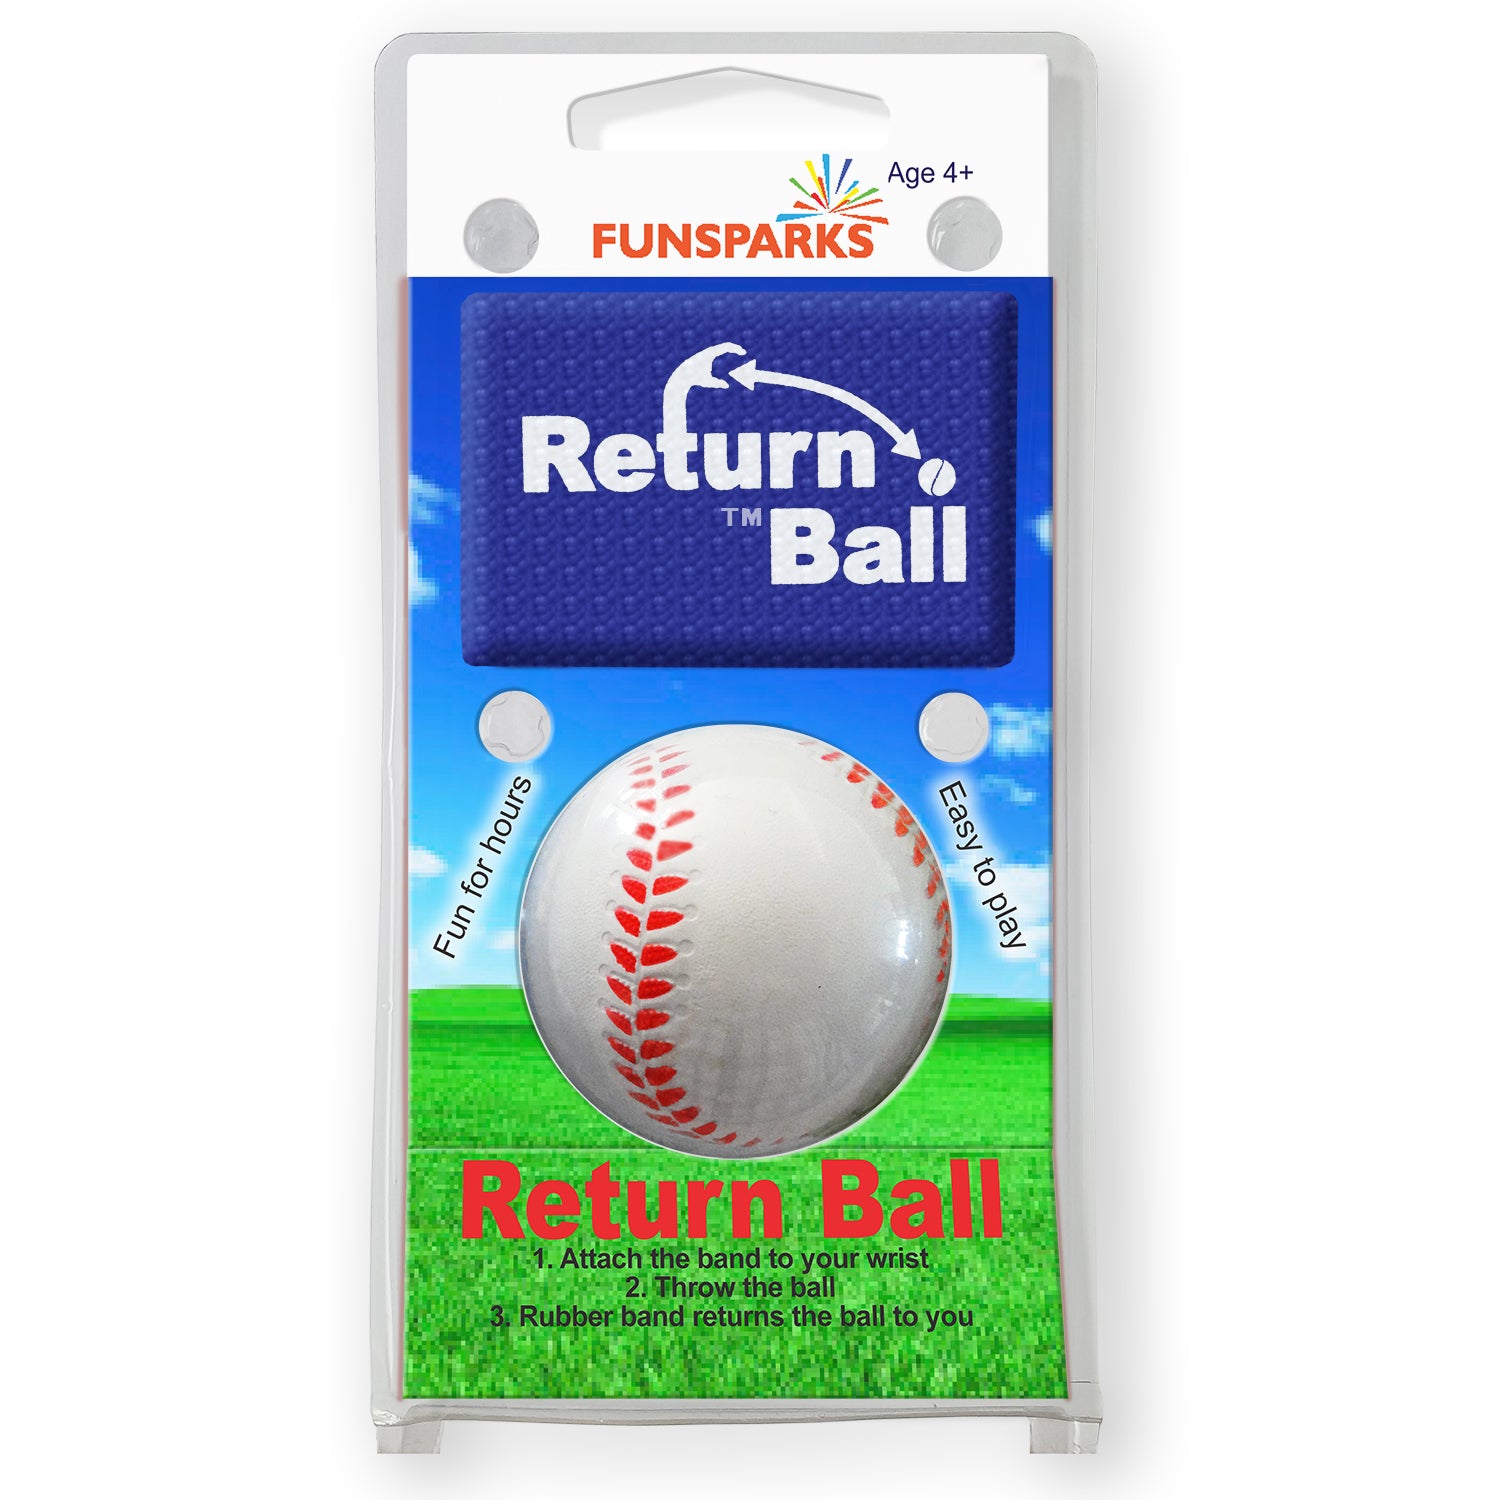 Return Ball Baseball